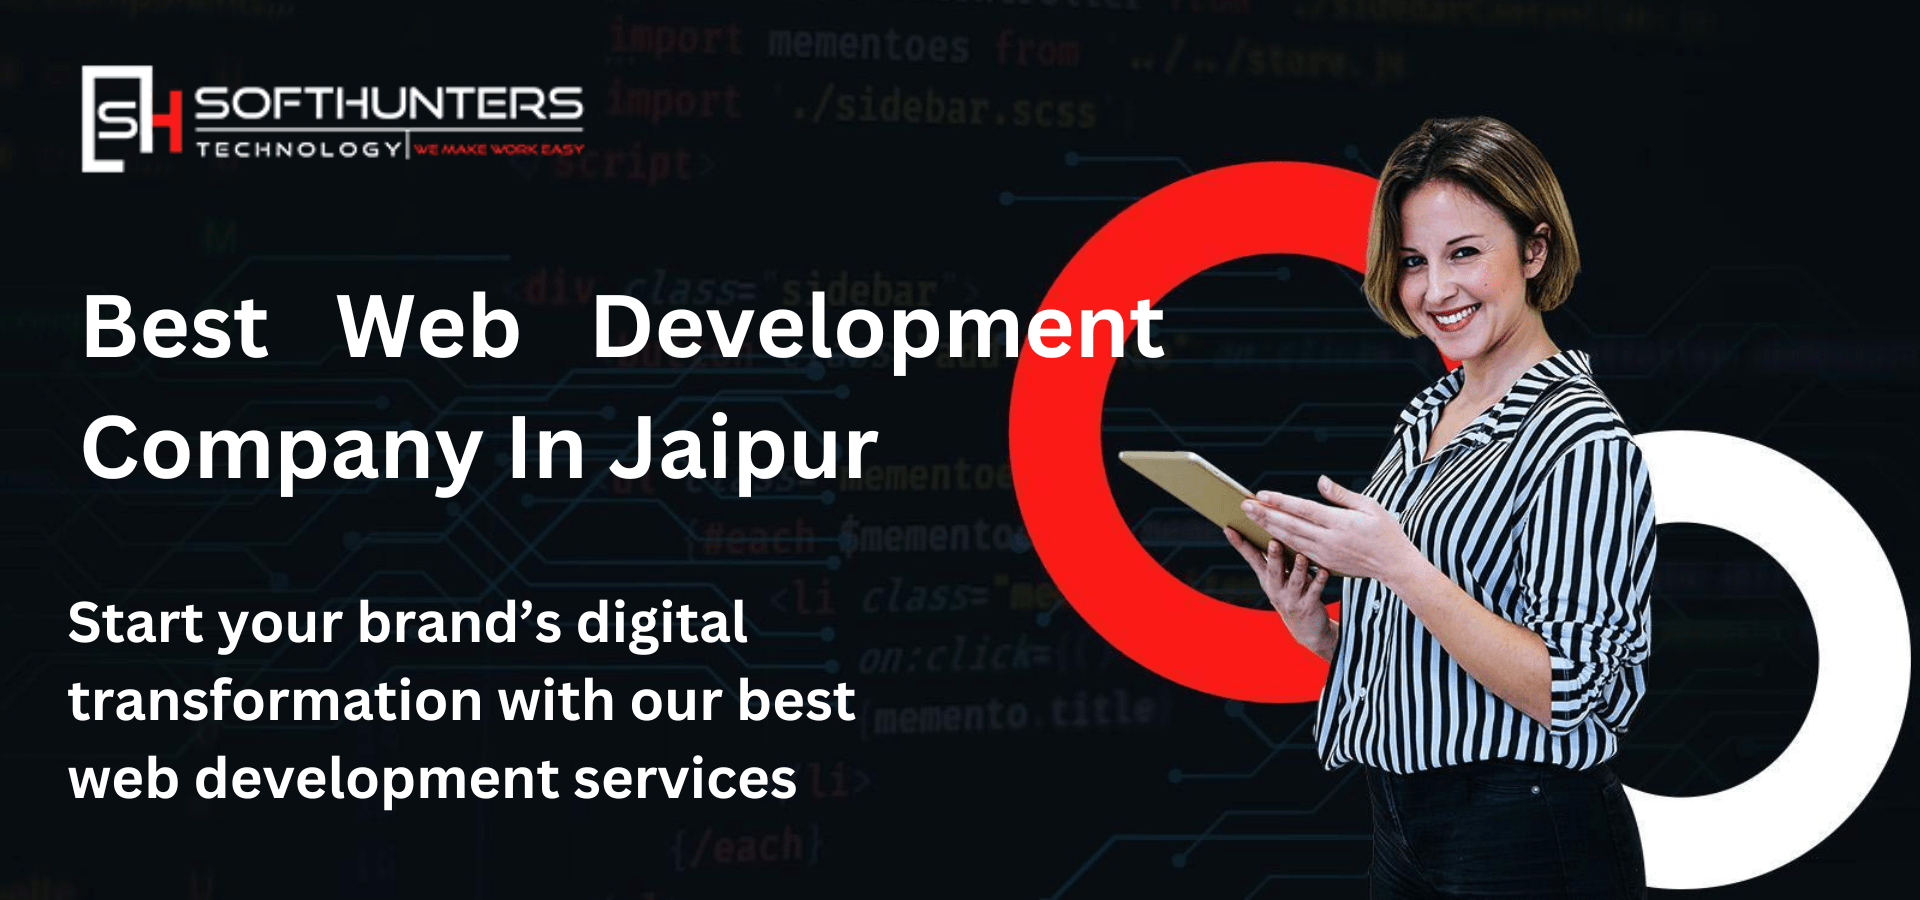 Best Website Development Company In Jaipur - Softhunters